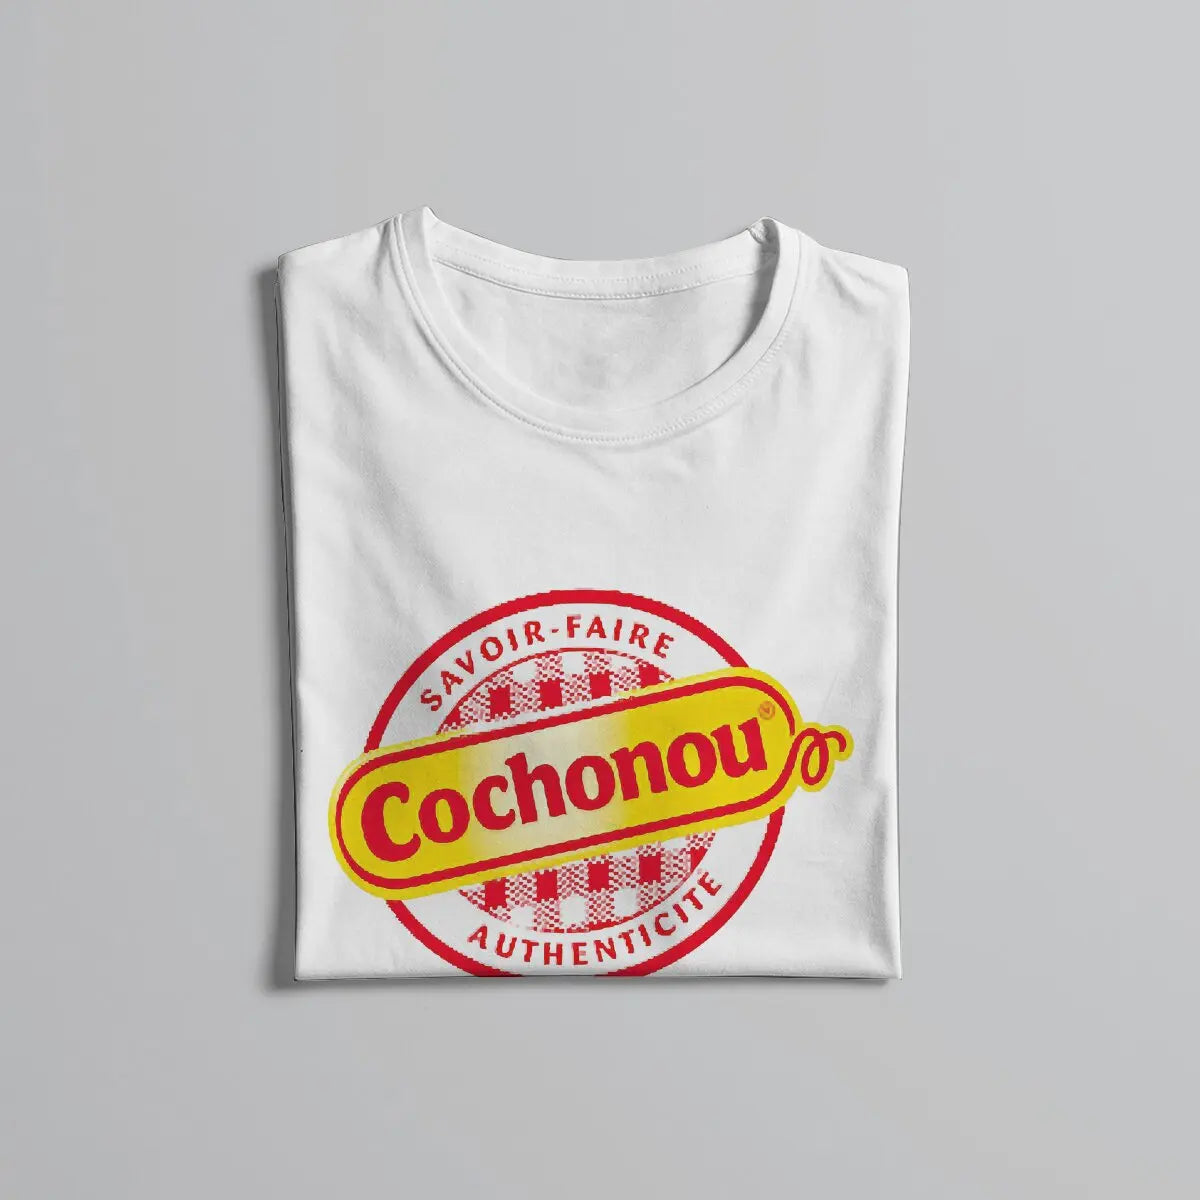 T shirt Cochonou humoristique idéal cadeau